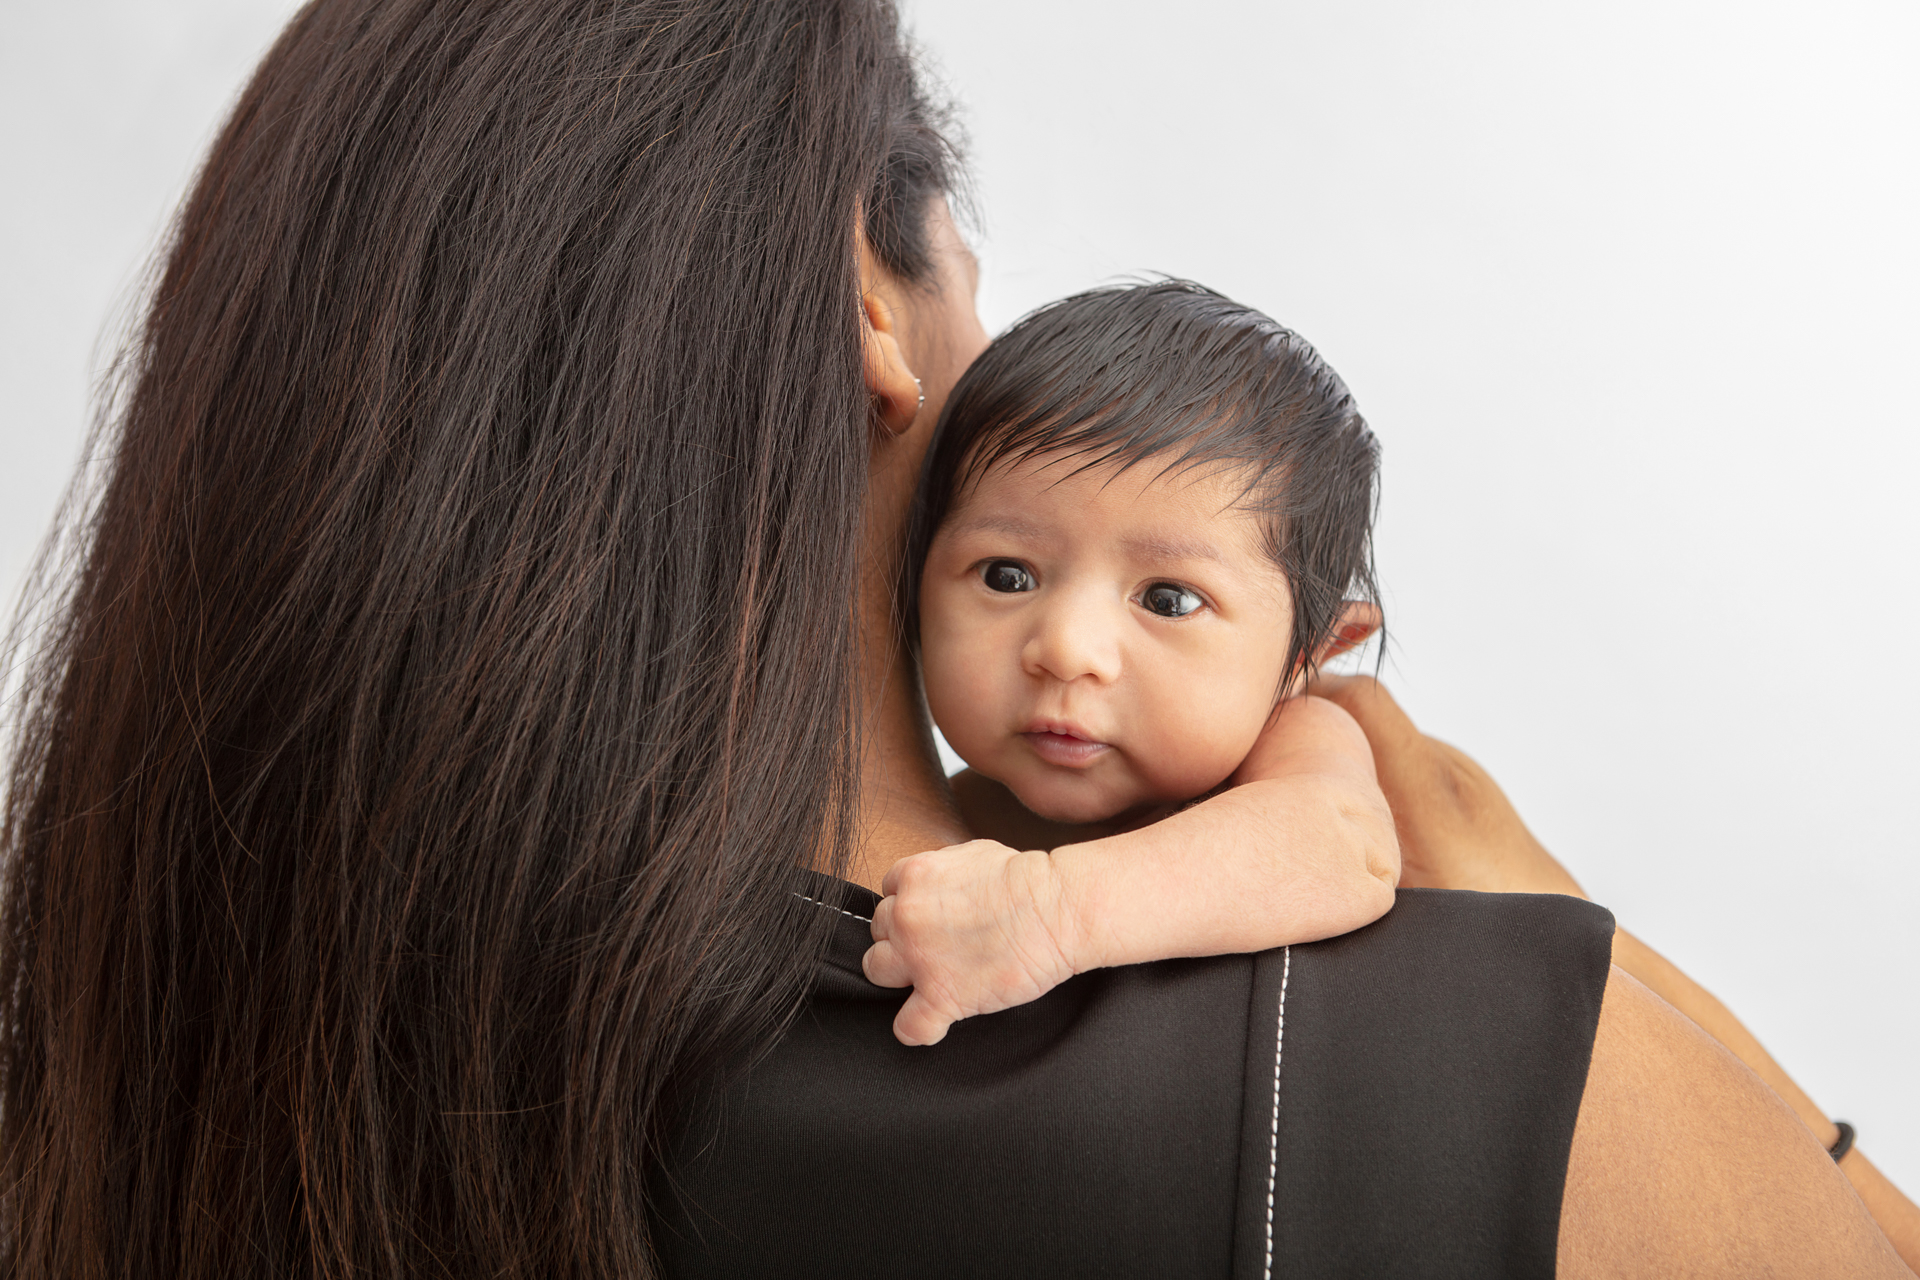 newborn baby girl with dark hair and dark eyes looking over her mother's shoulder